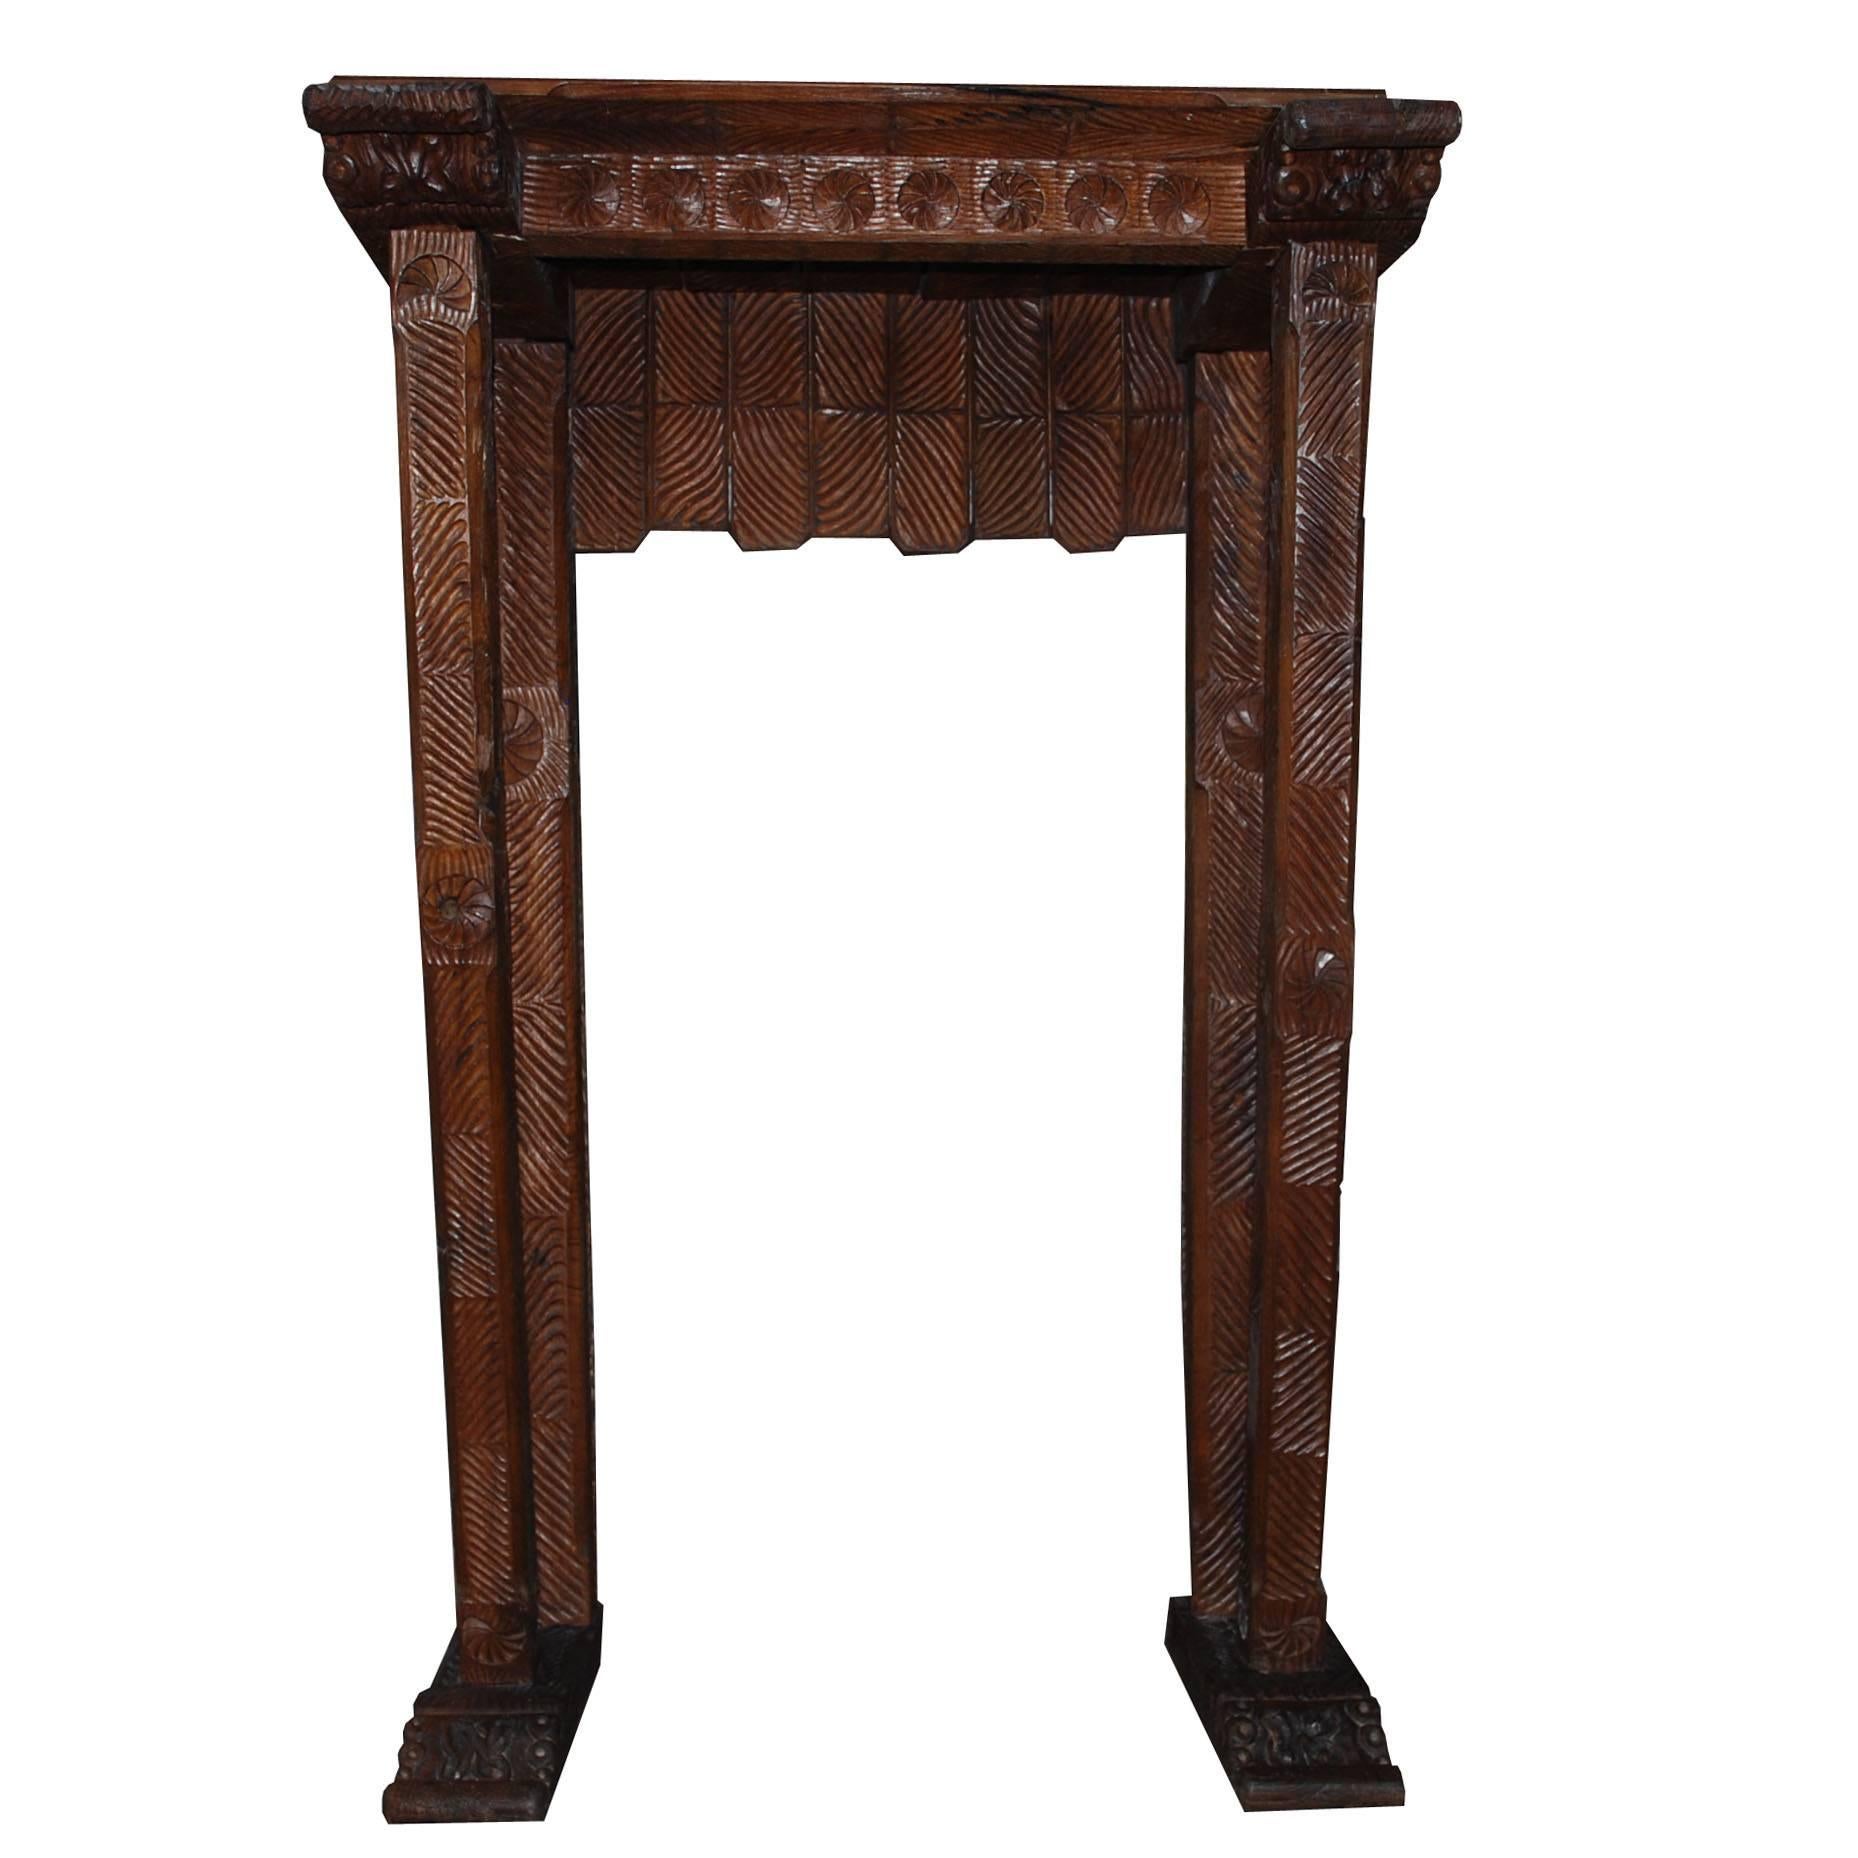 20th century neo Gothic hand-carved oakwood fireplace mantel.
Originates Netherlands, dating, circa 1900.
